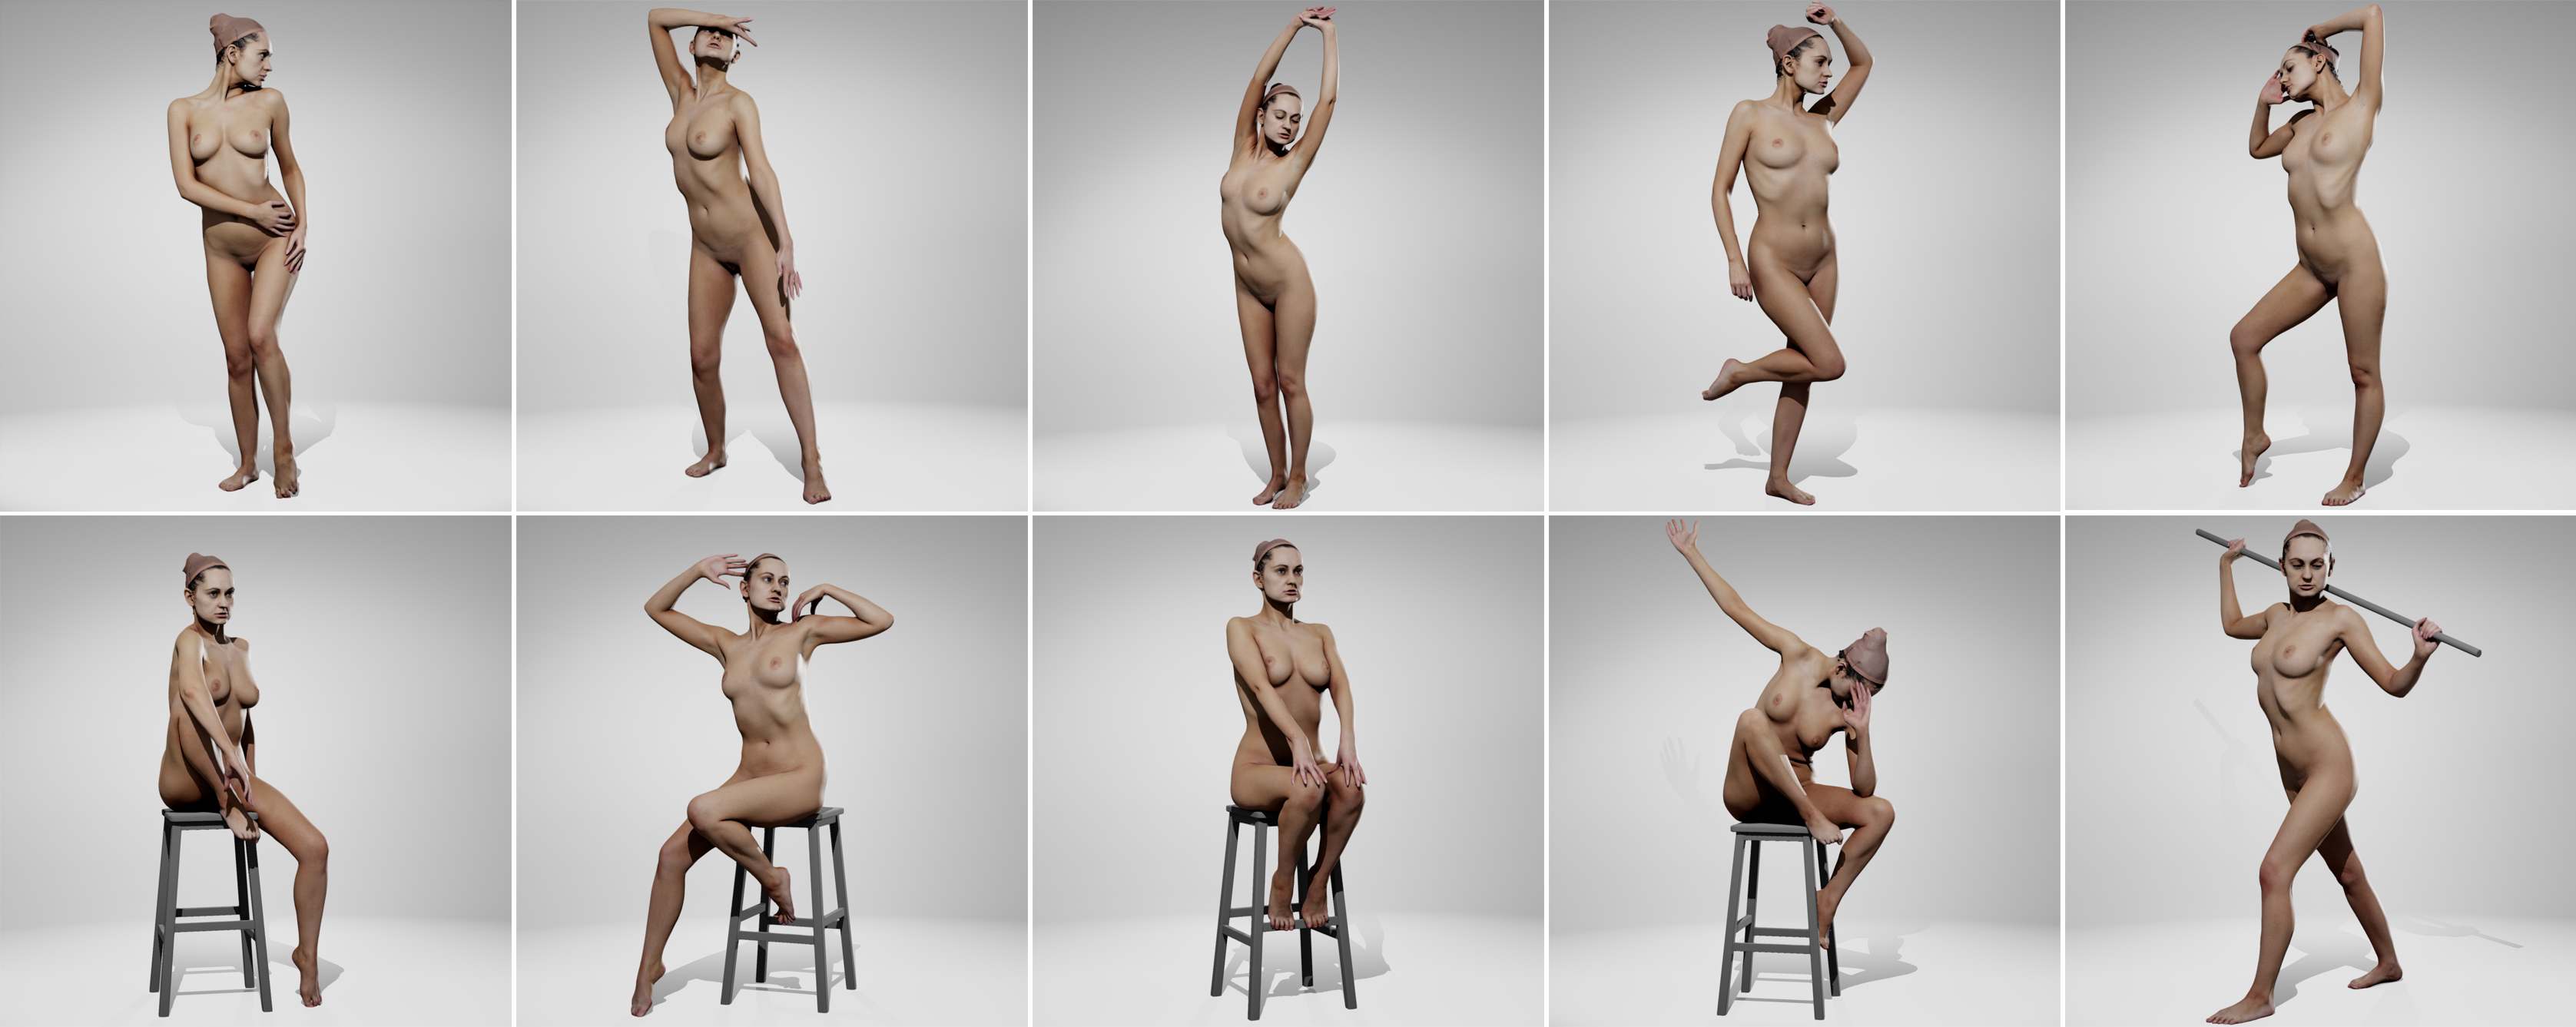 Nude photoshoot poses